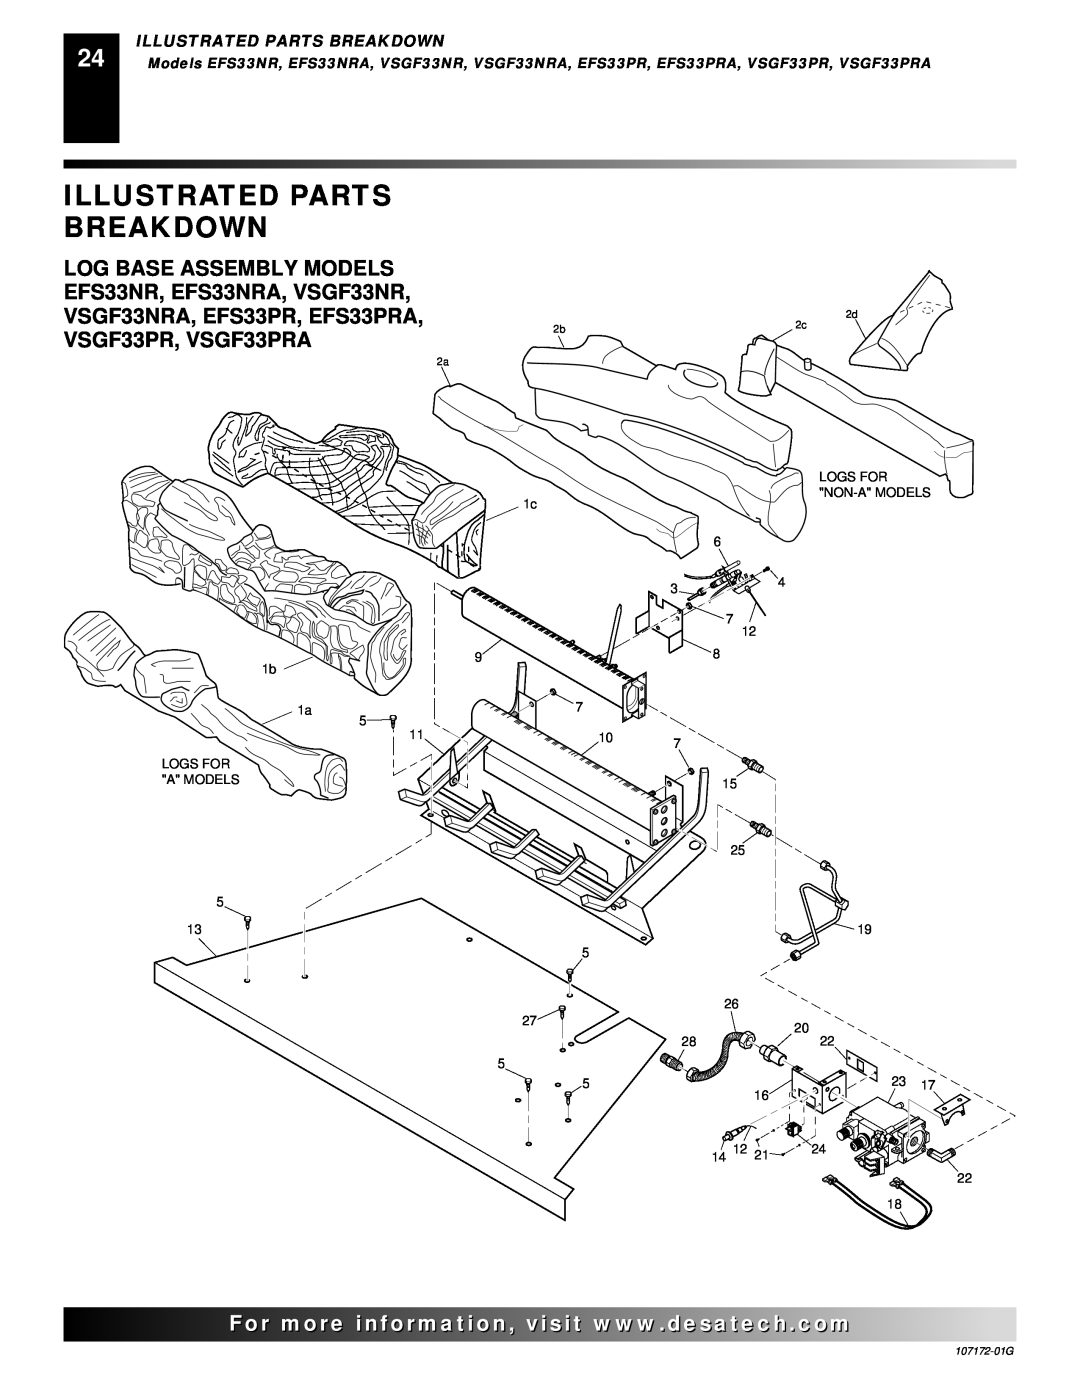 Desa VSGF33PRA installation manual Illustrated Parts Breakdown, 107172-01G 